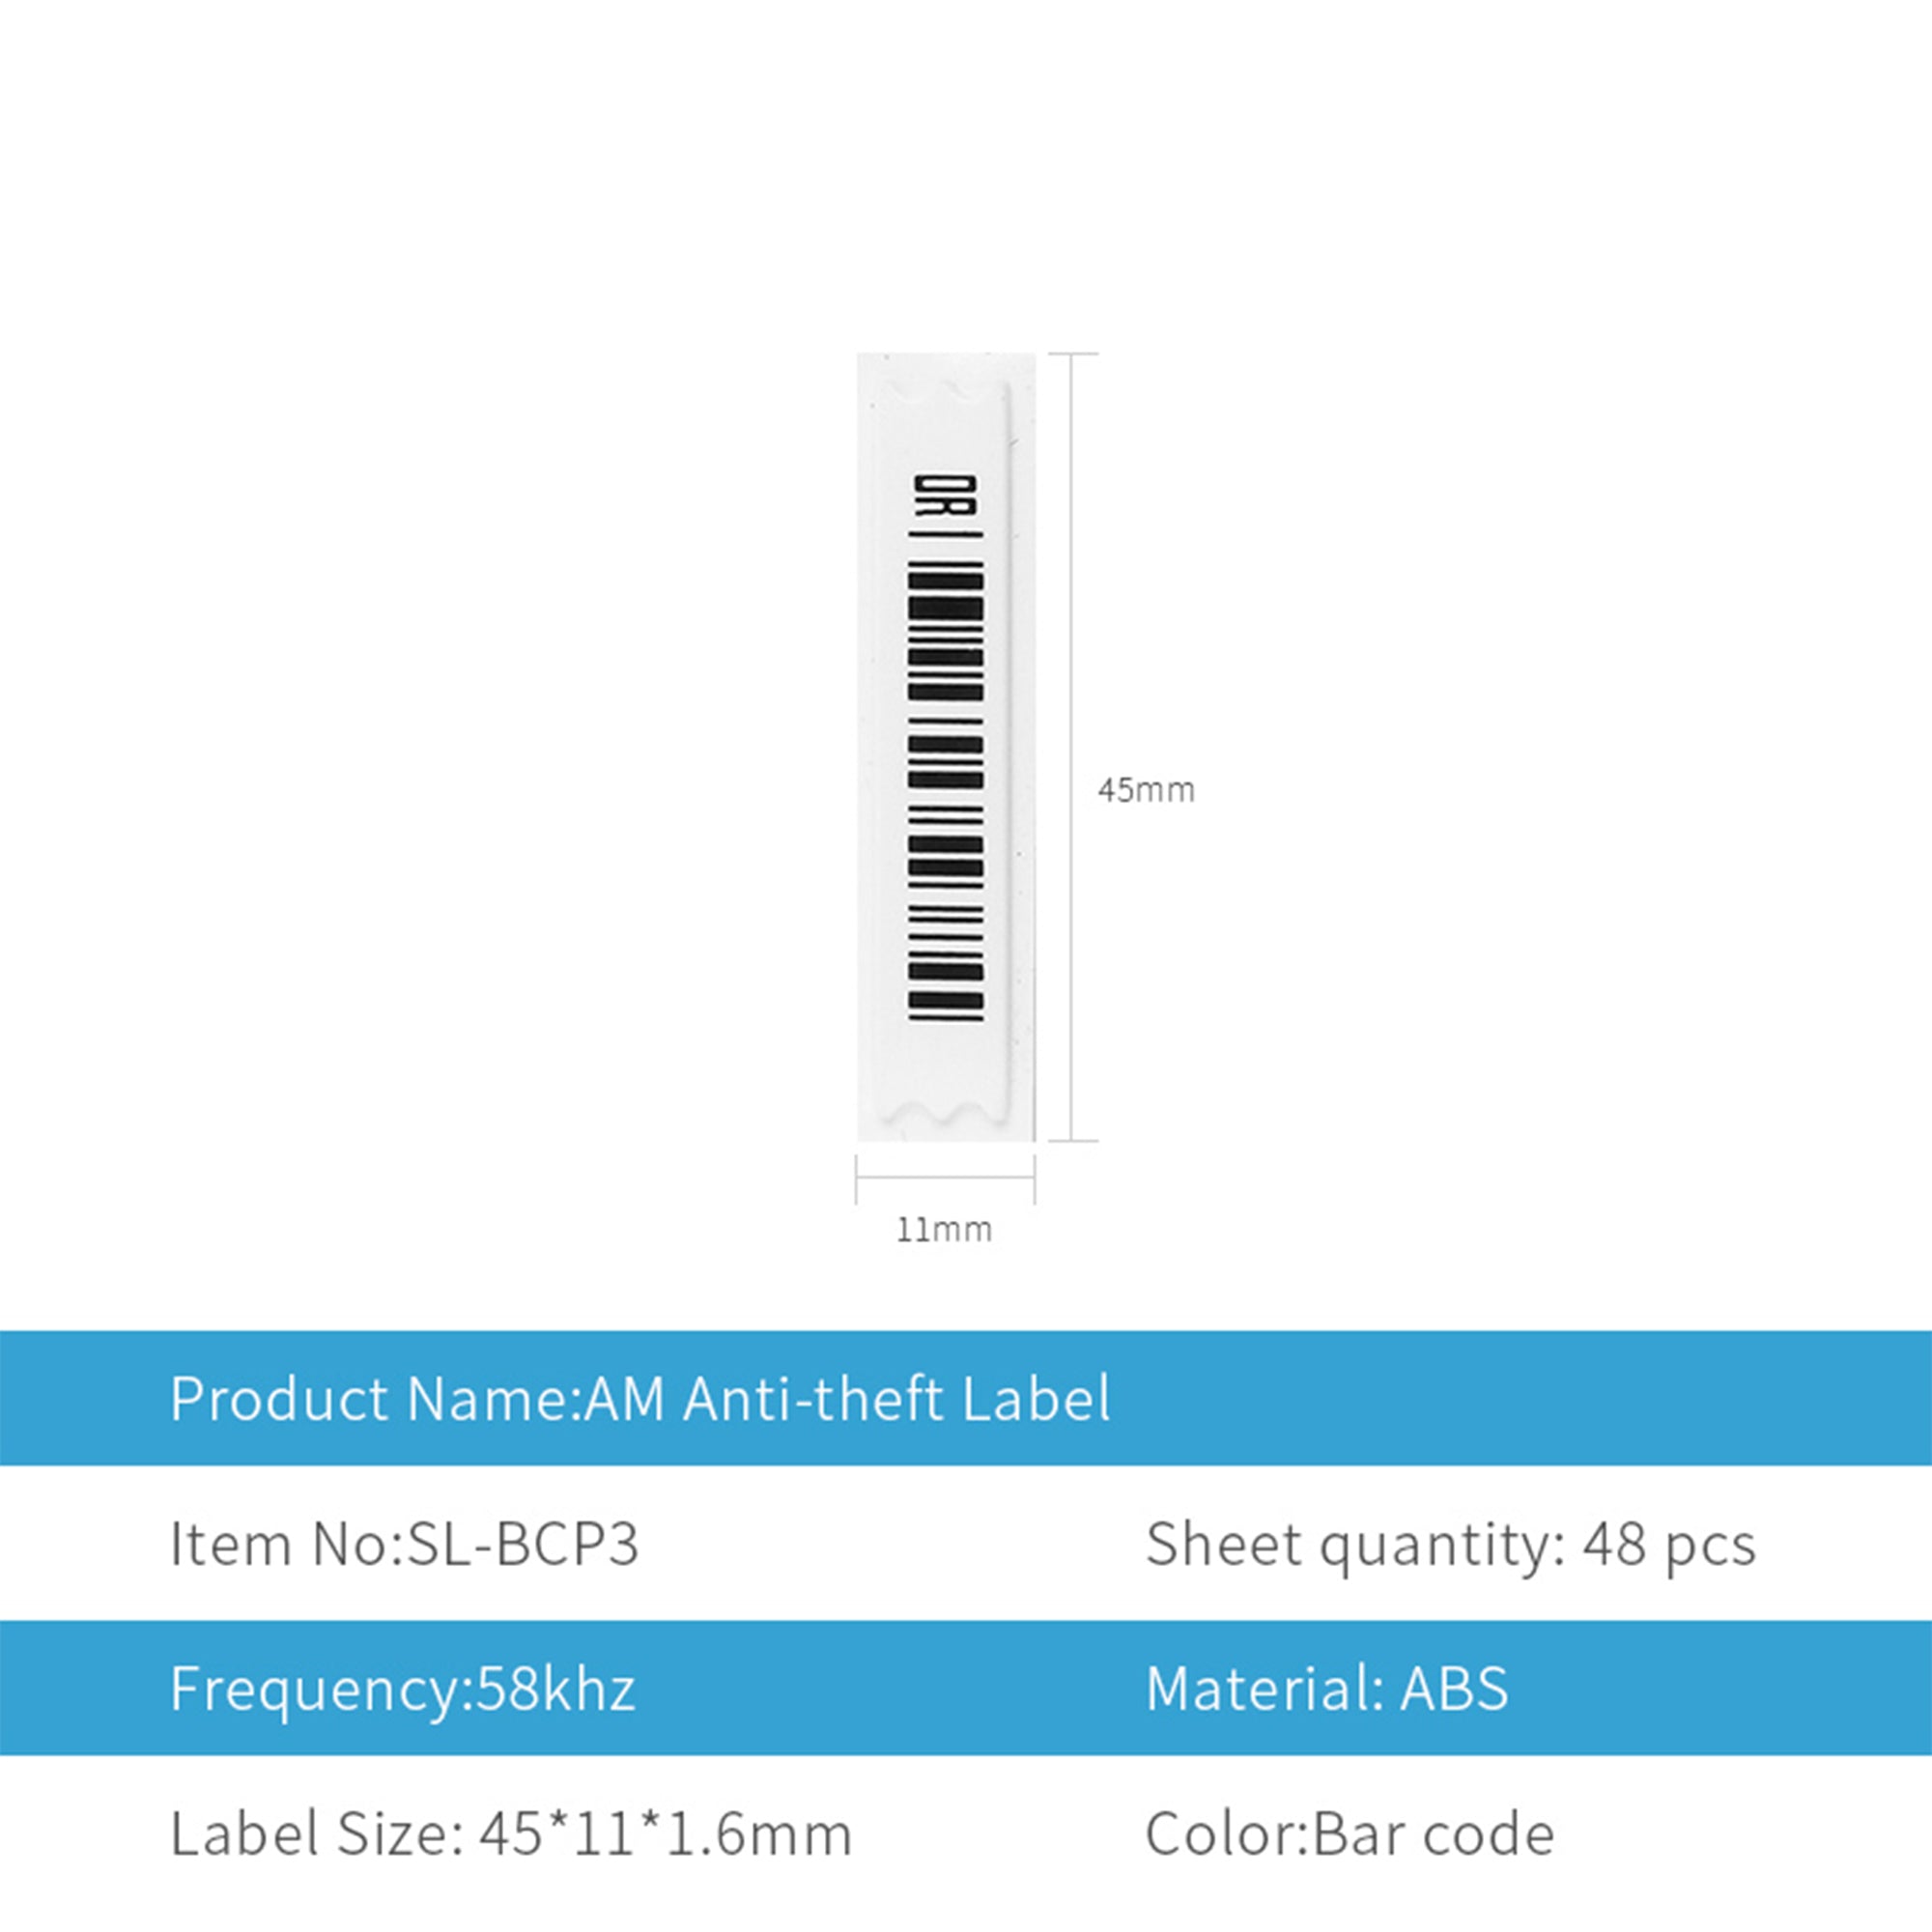 Factory Adhesive 58kHz Anti-Theft Alarm AM EAS Labels (5000 PCS)